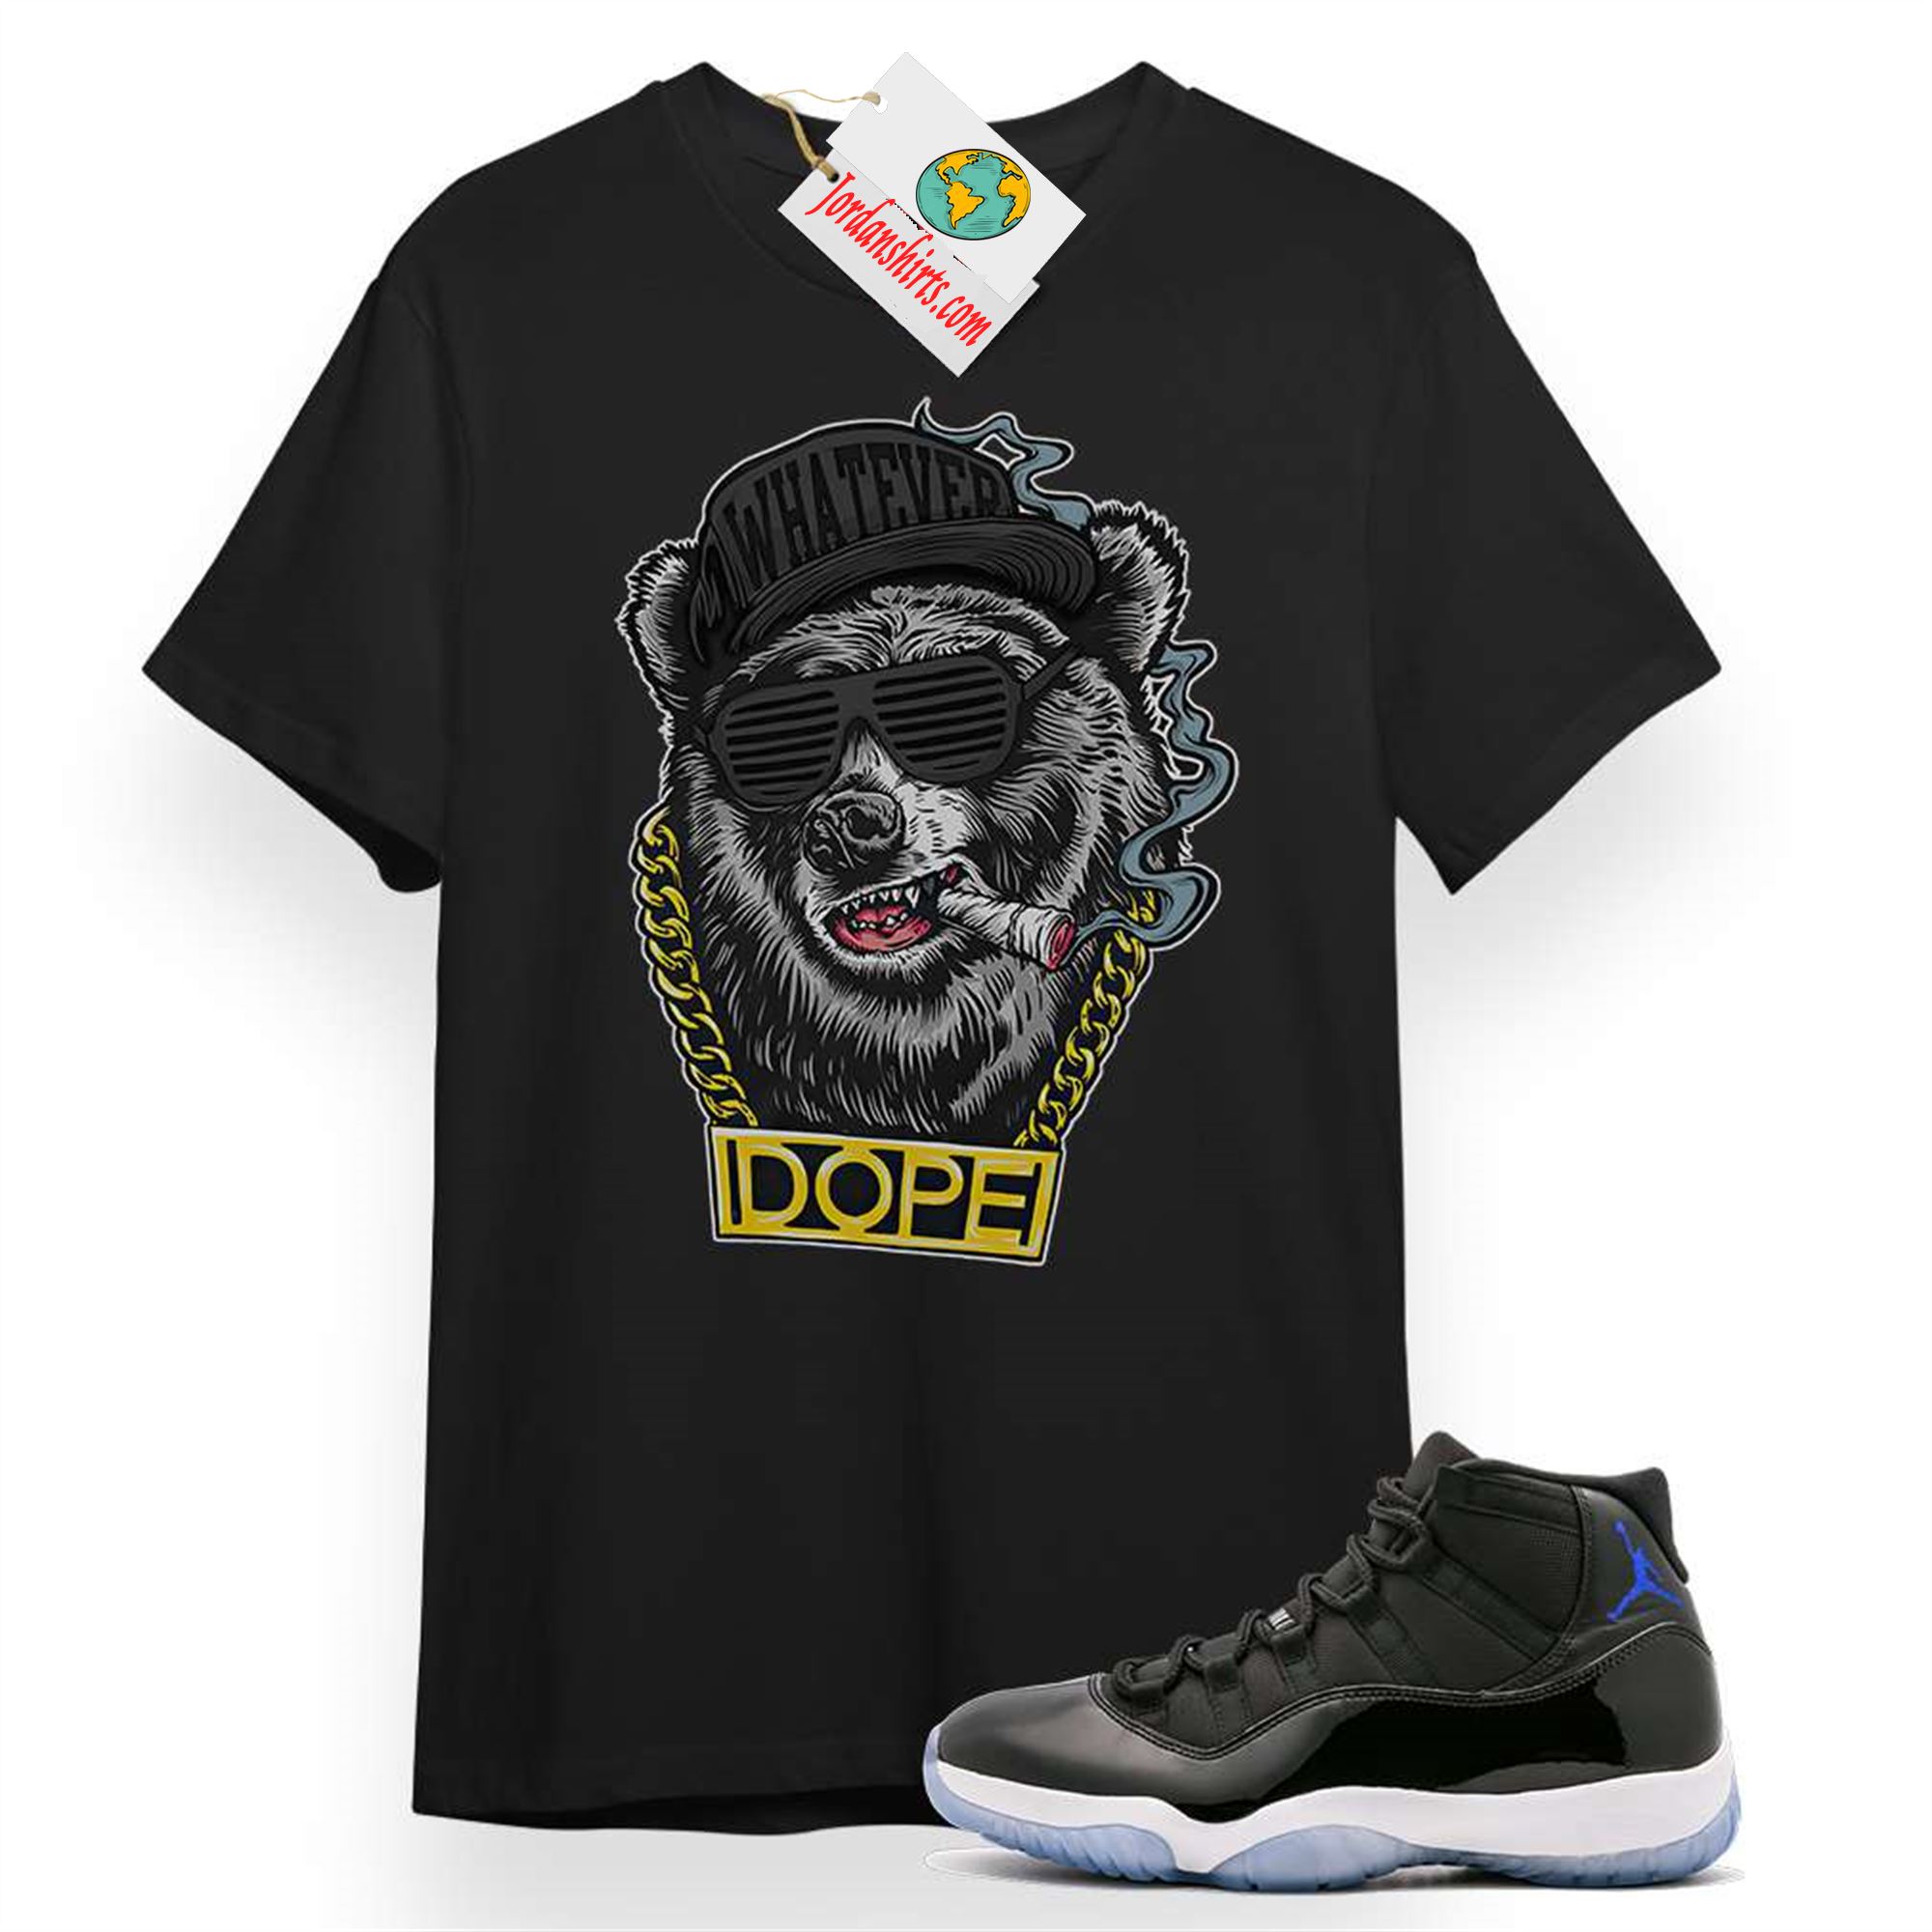 Jordan 11 Shirt, Whatever Dope Black T-shirt Air Jordan 11 Space Jam 11s Size Up To 5xl